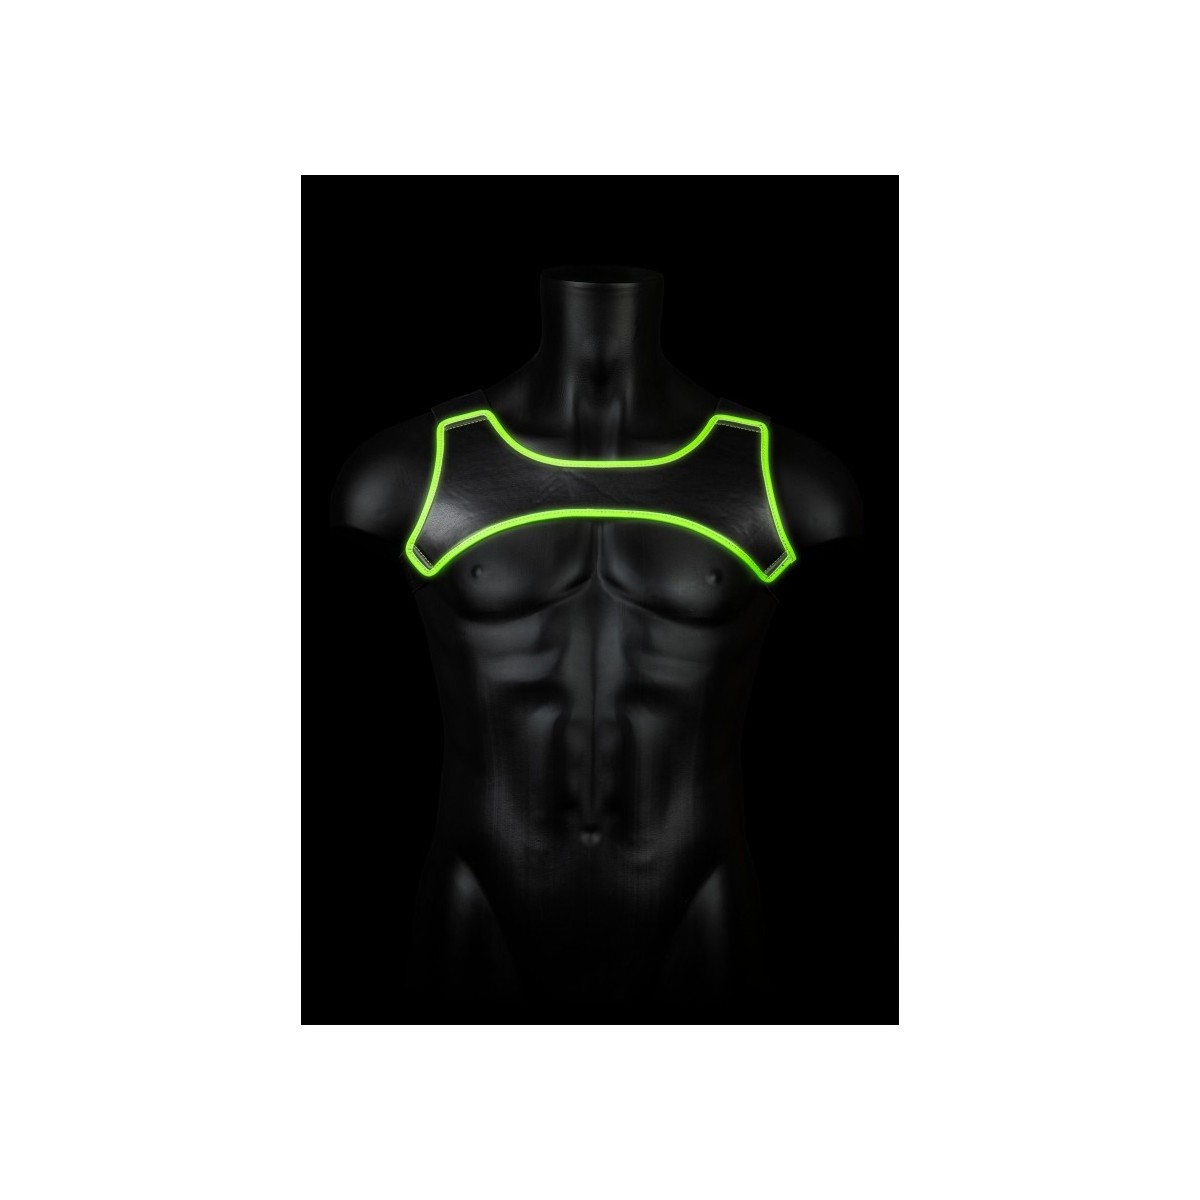 Imbragatura uomo in eco pelle Neoprene Harness - Glow in the Dark - Neon Green/Black